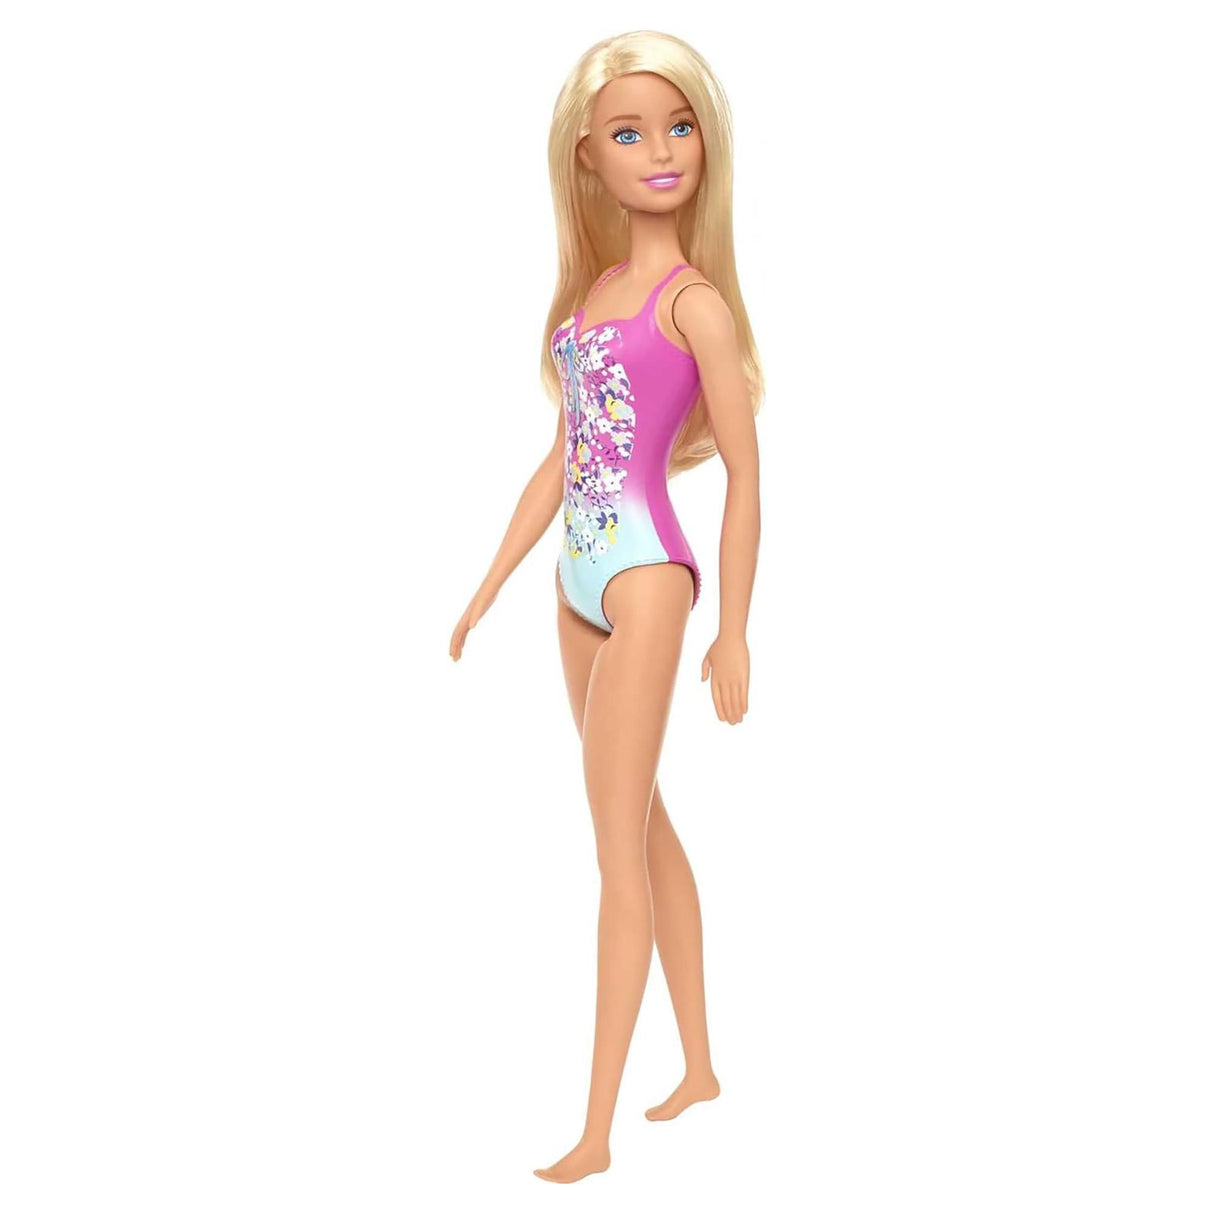 Barbie Swimsuit Doll - Pink & Blue Swimsuit